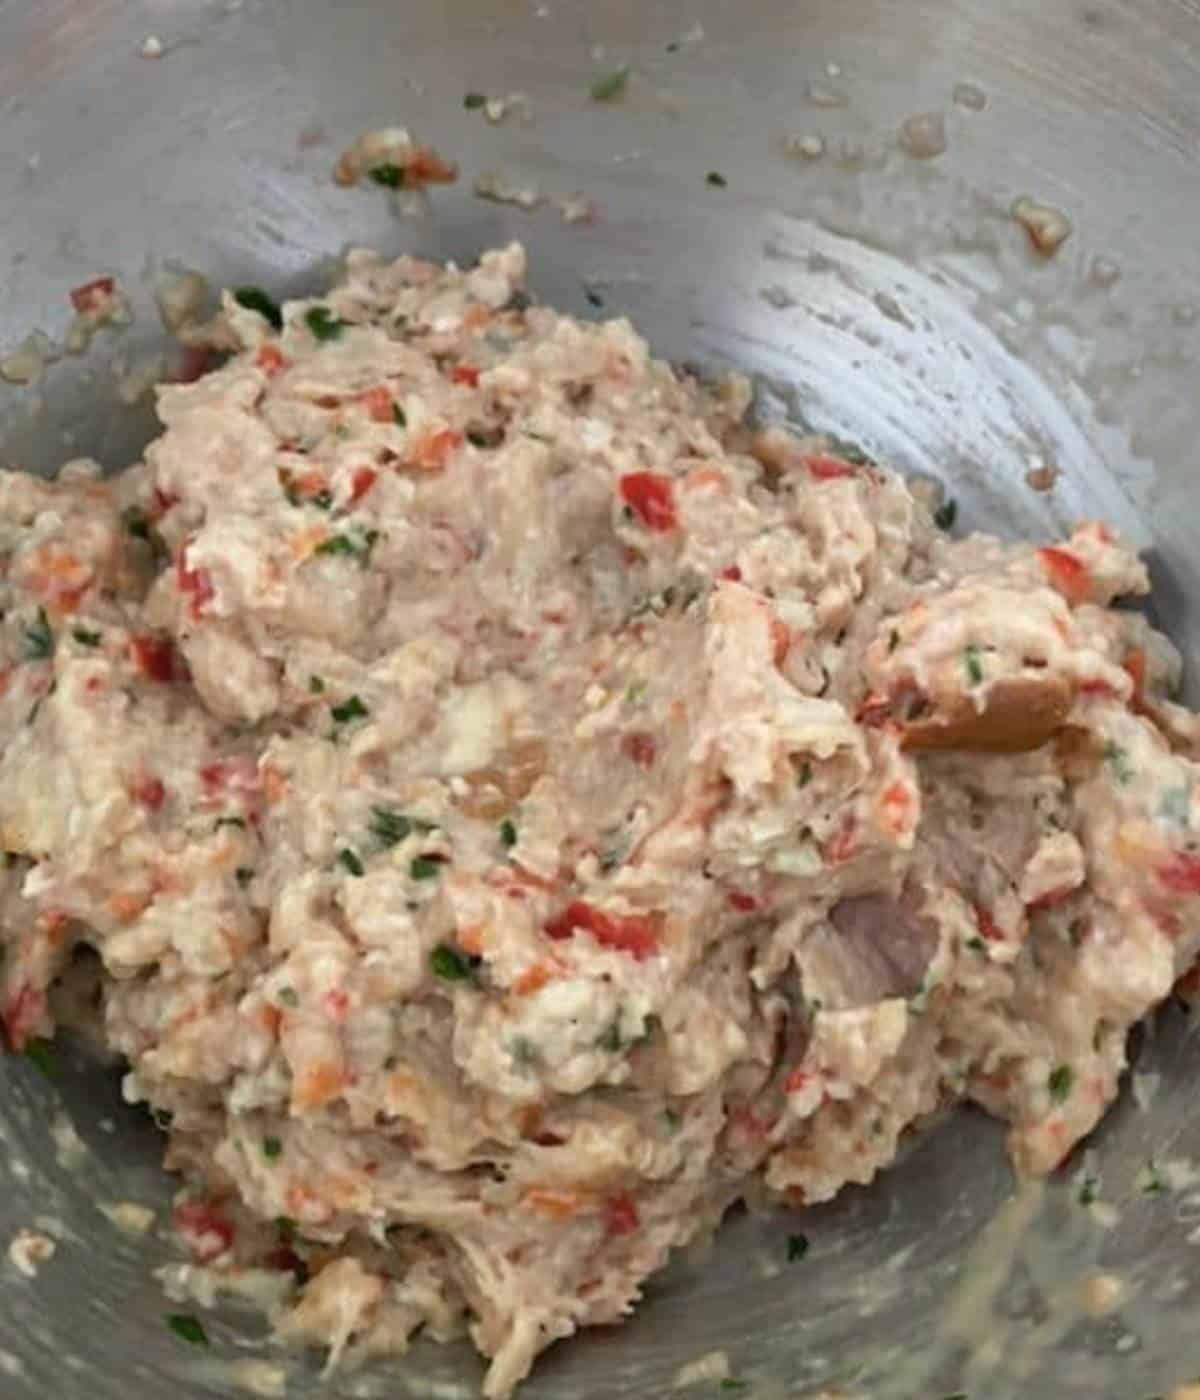 Ground chicken kofta meatball mixture.